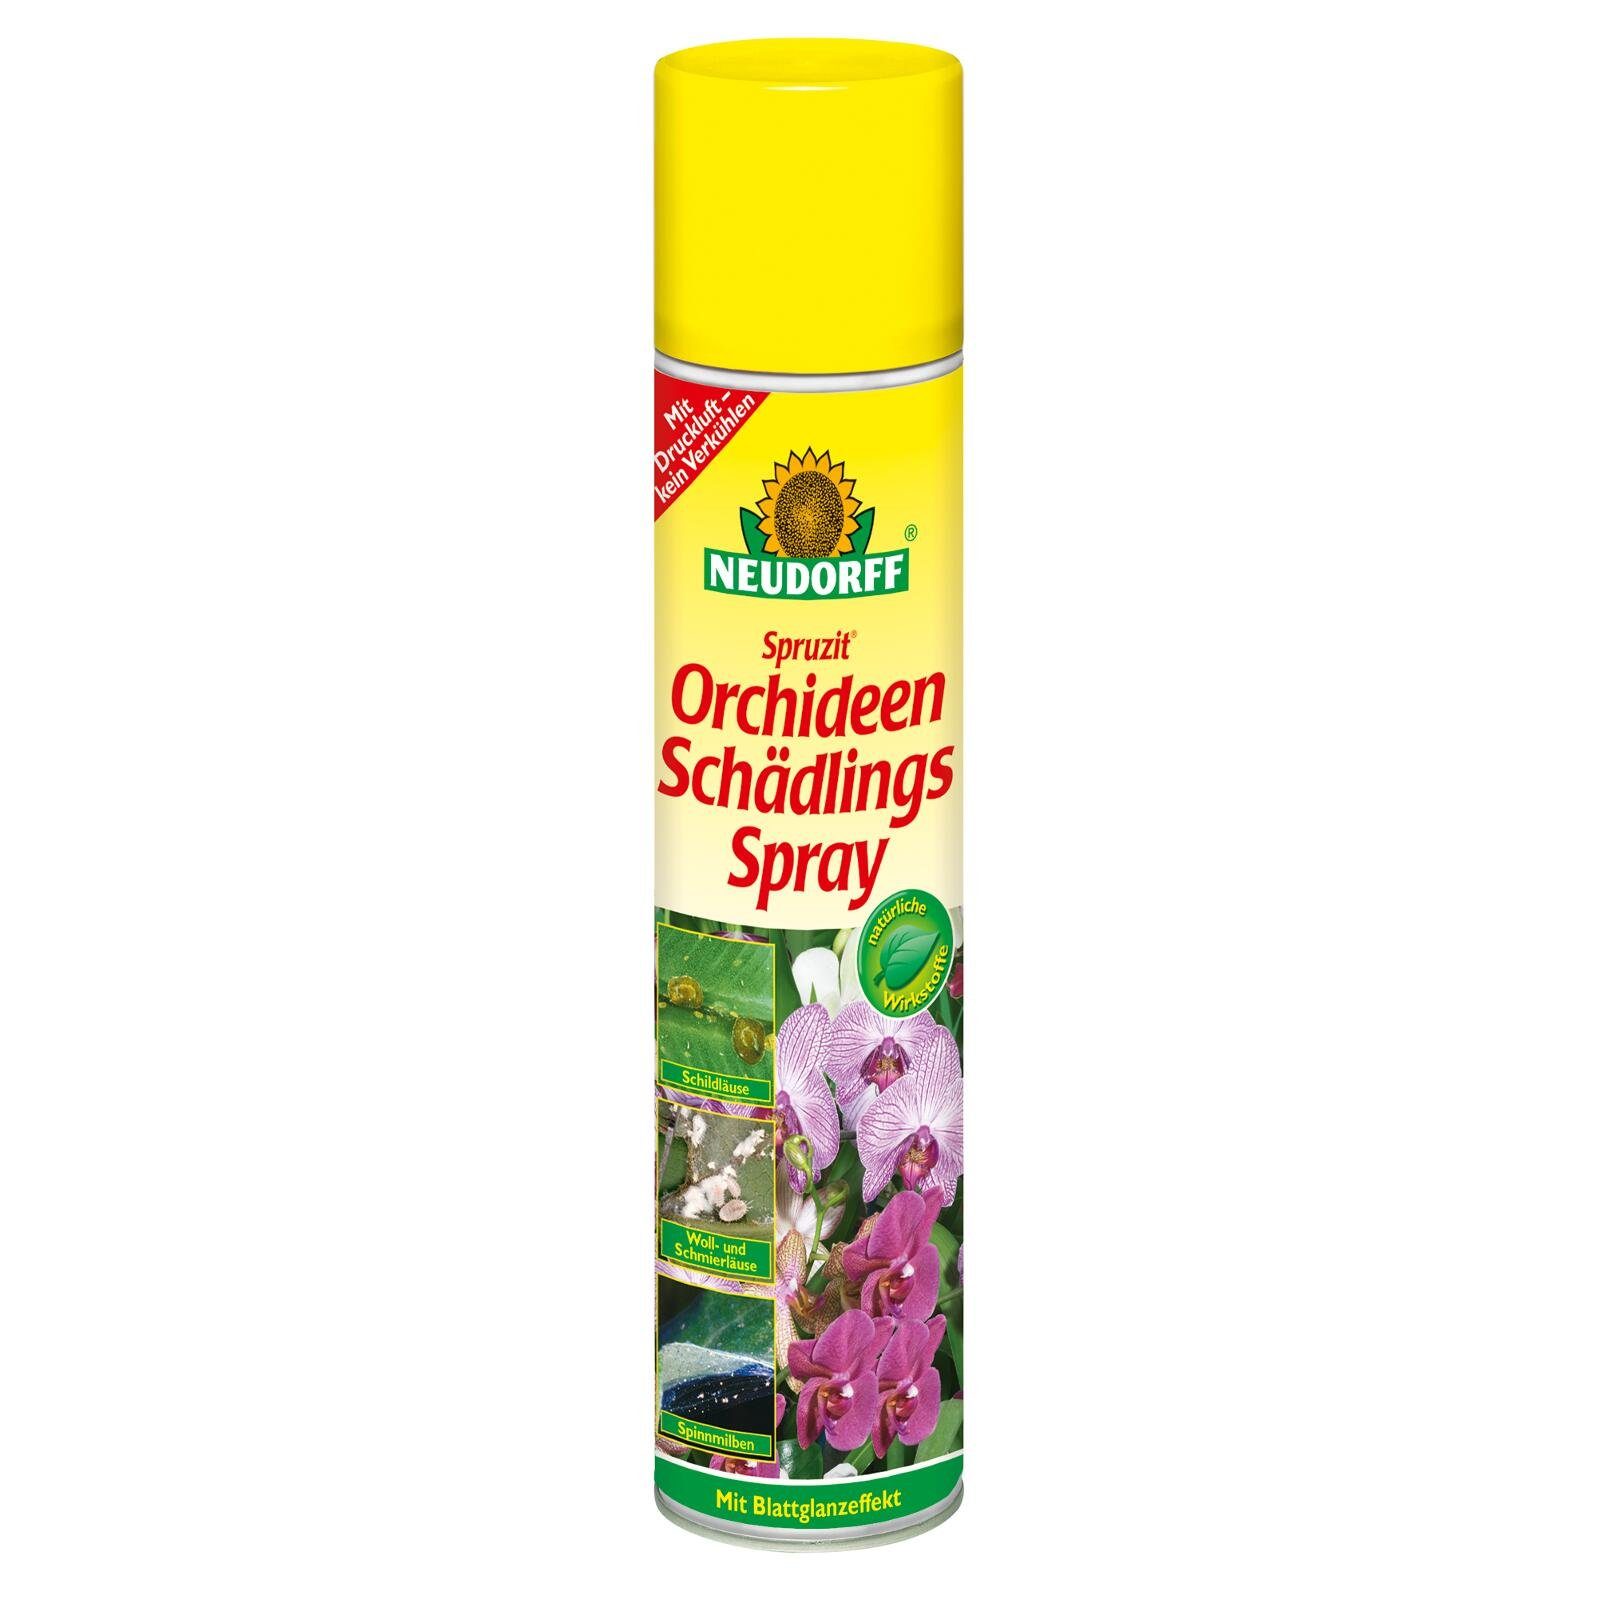 Neudorff Insektenvernichtungsmittel Spruzit Orchideen Schädlingsspray ml 300